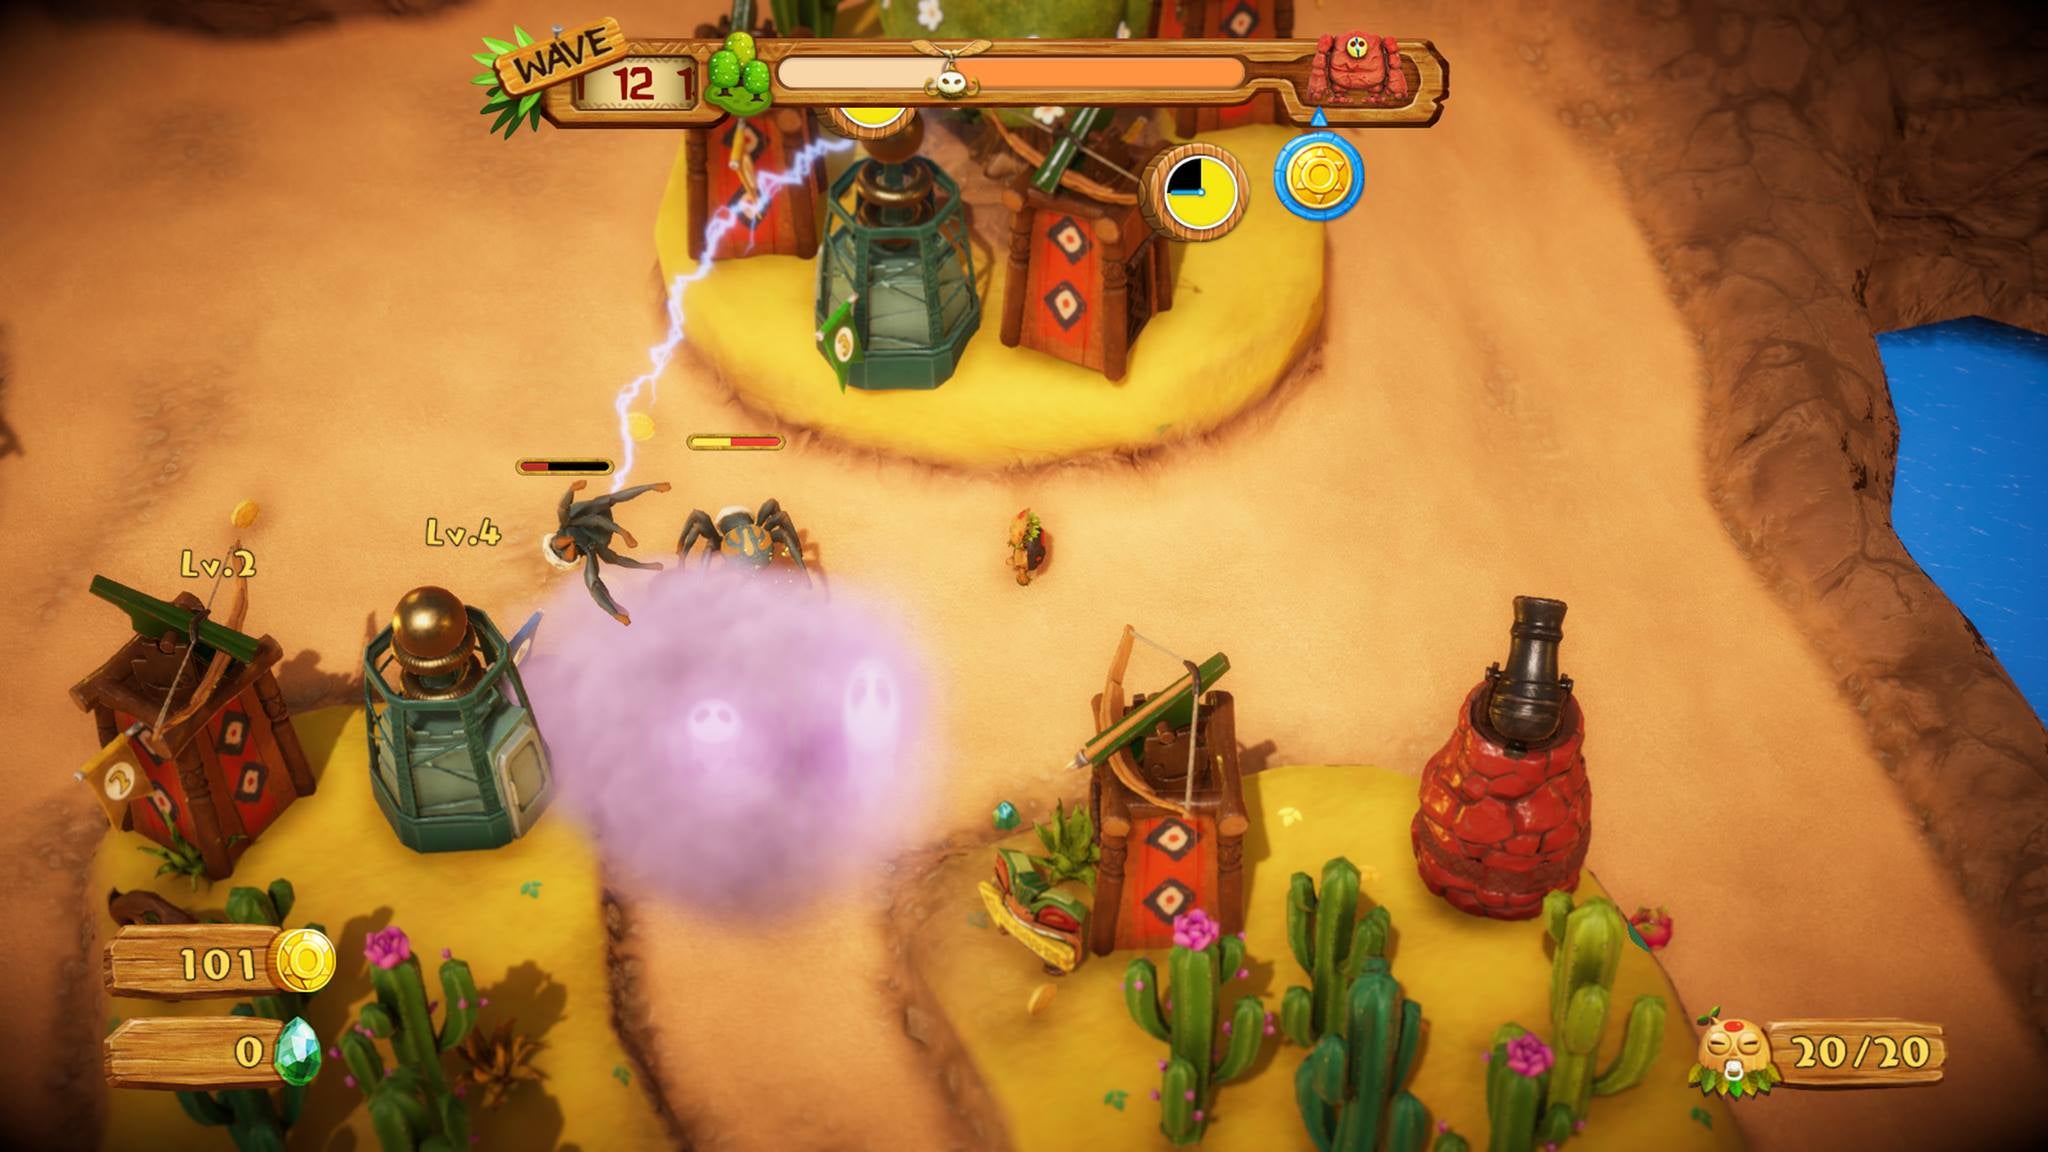 Screenshot of PixelJunk Monsters 2 gameplay with towers and enemies.